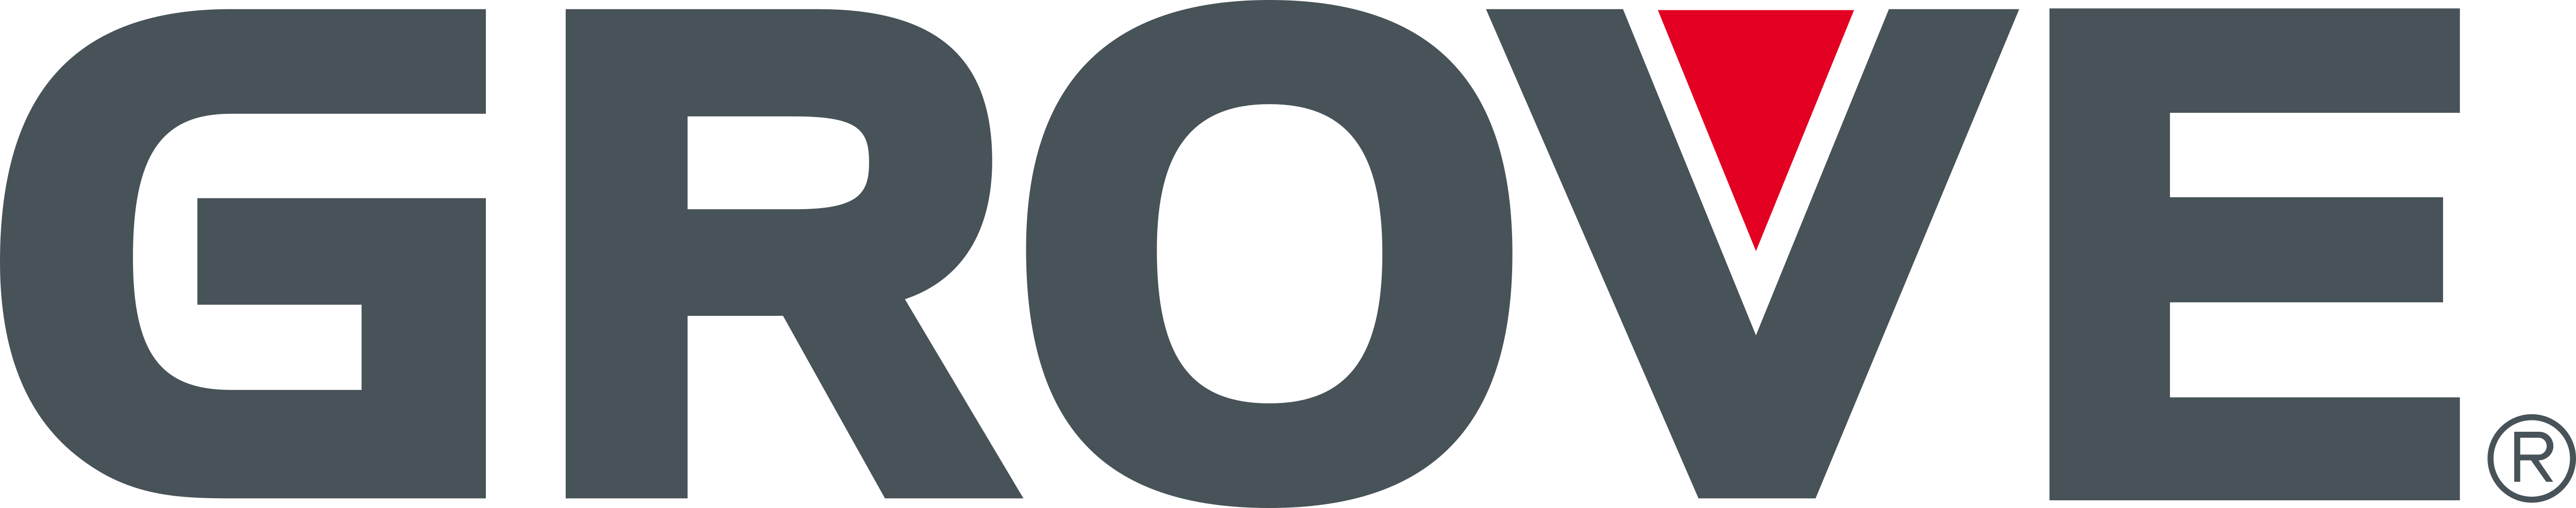 Grove_Logo